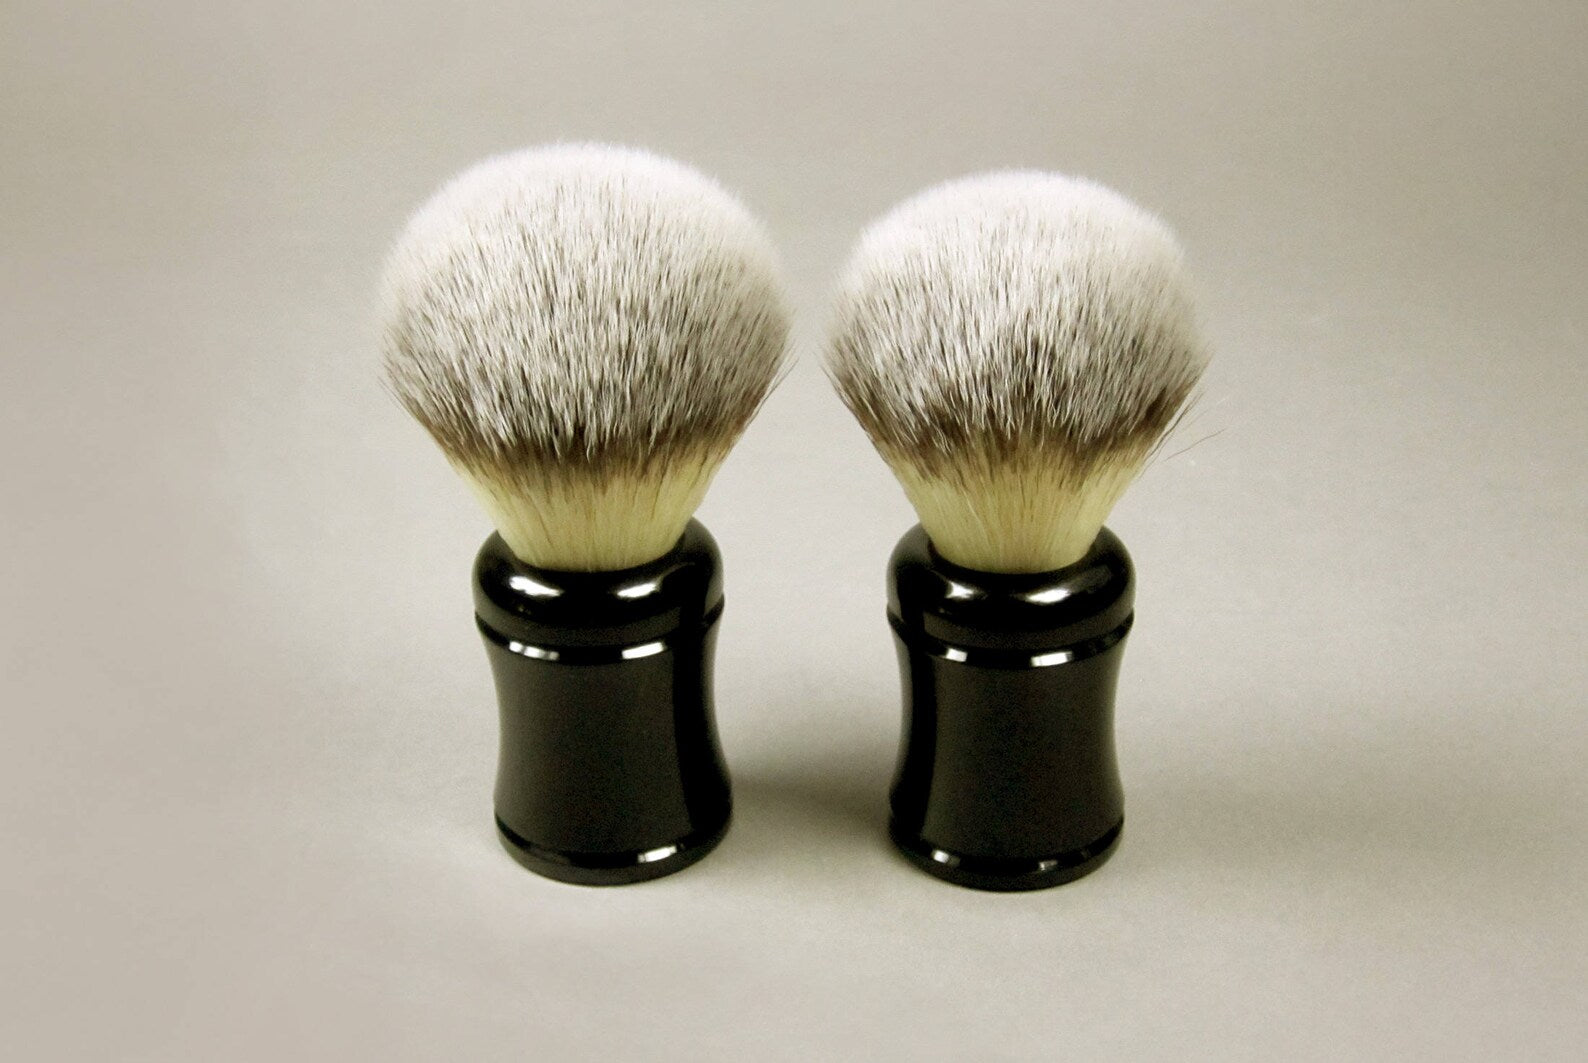 Acrylic Handle Shaving Brush, Synthetic Fiber (Black)